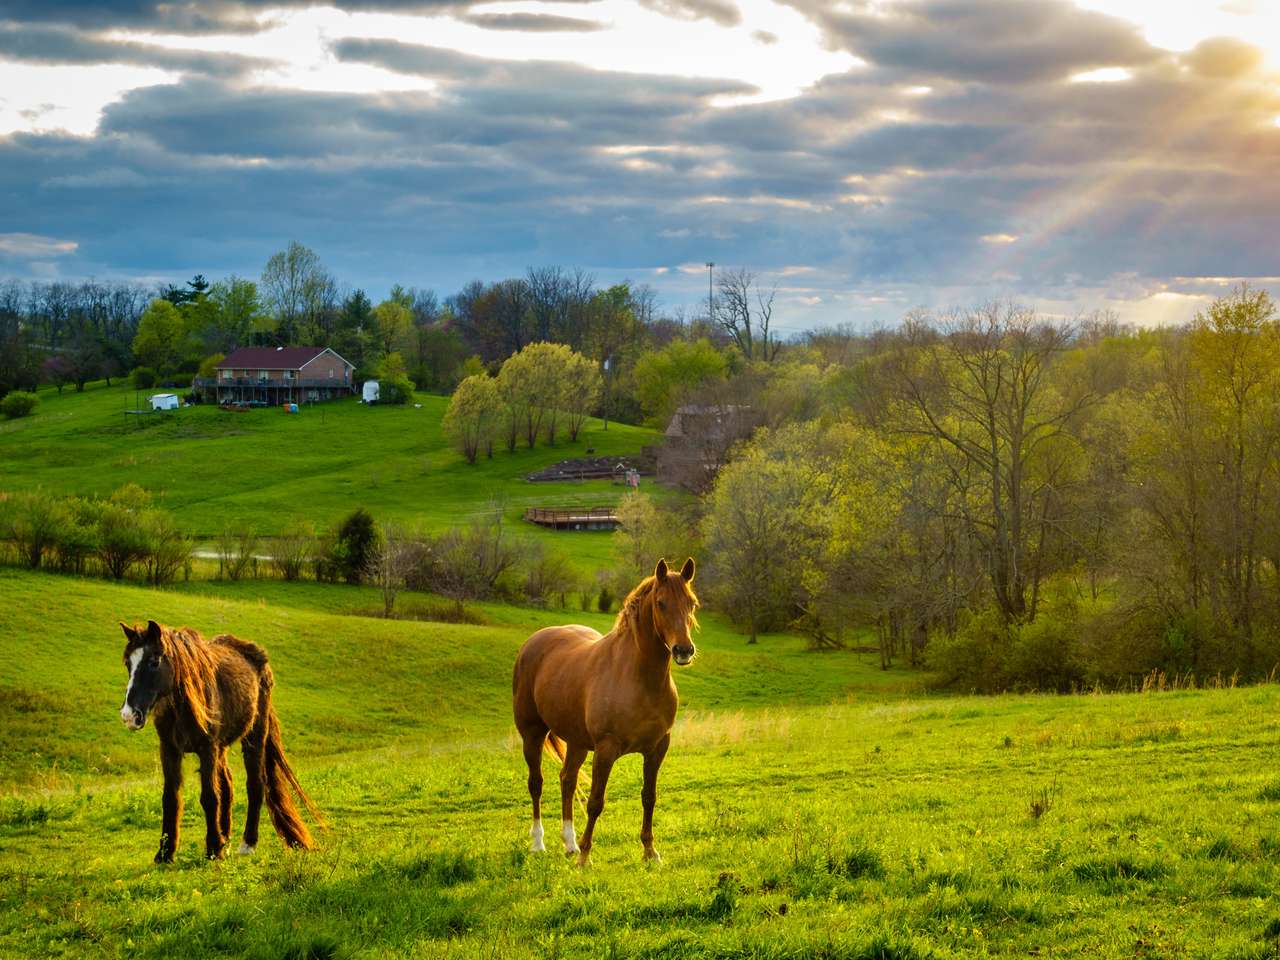 Belos cavalos de castanha puzzle online a partir de fotografia